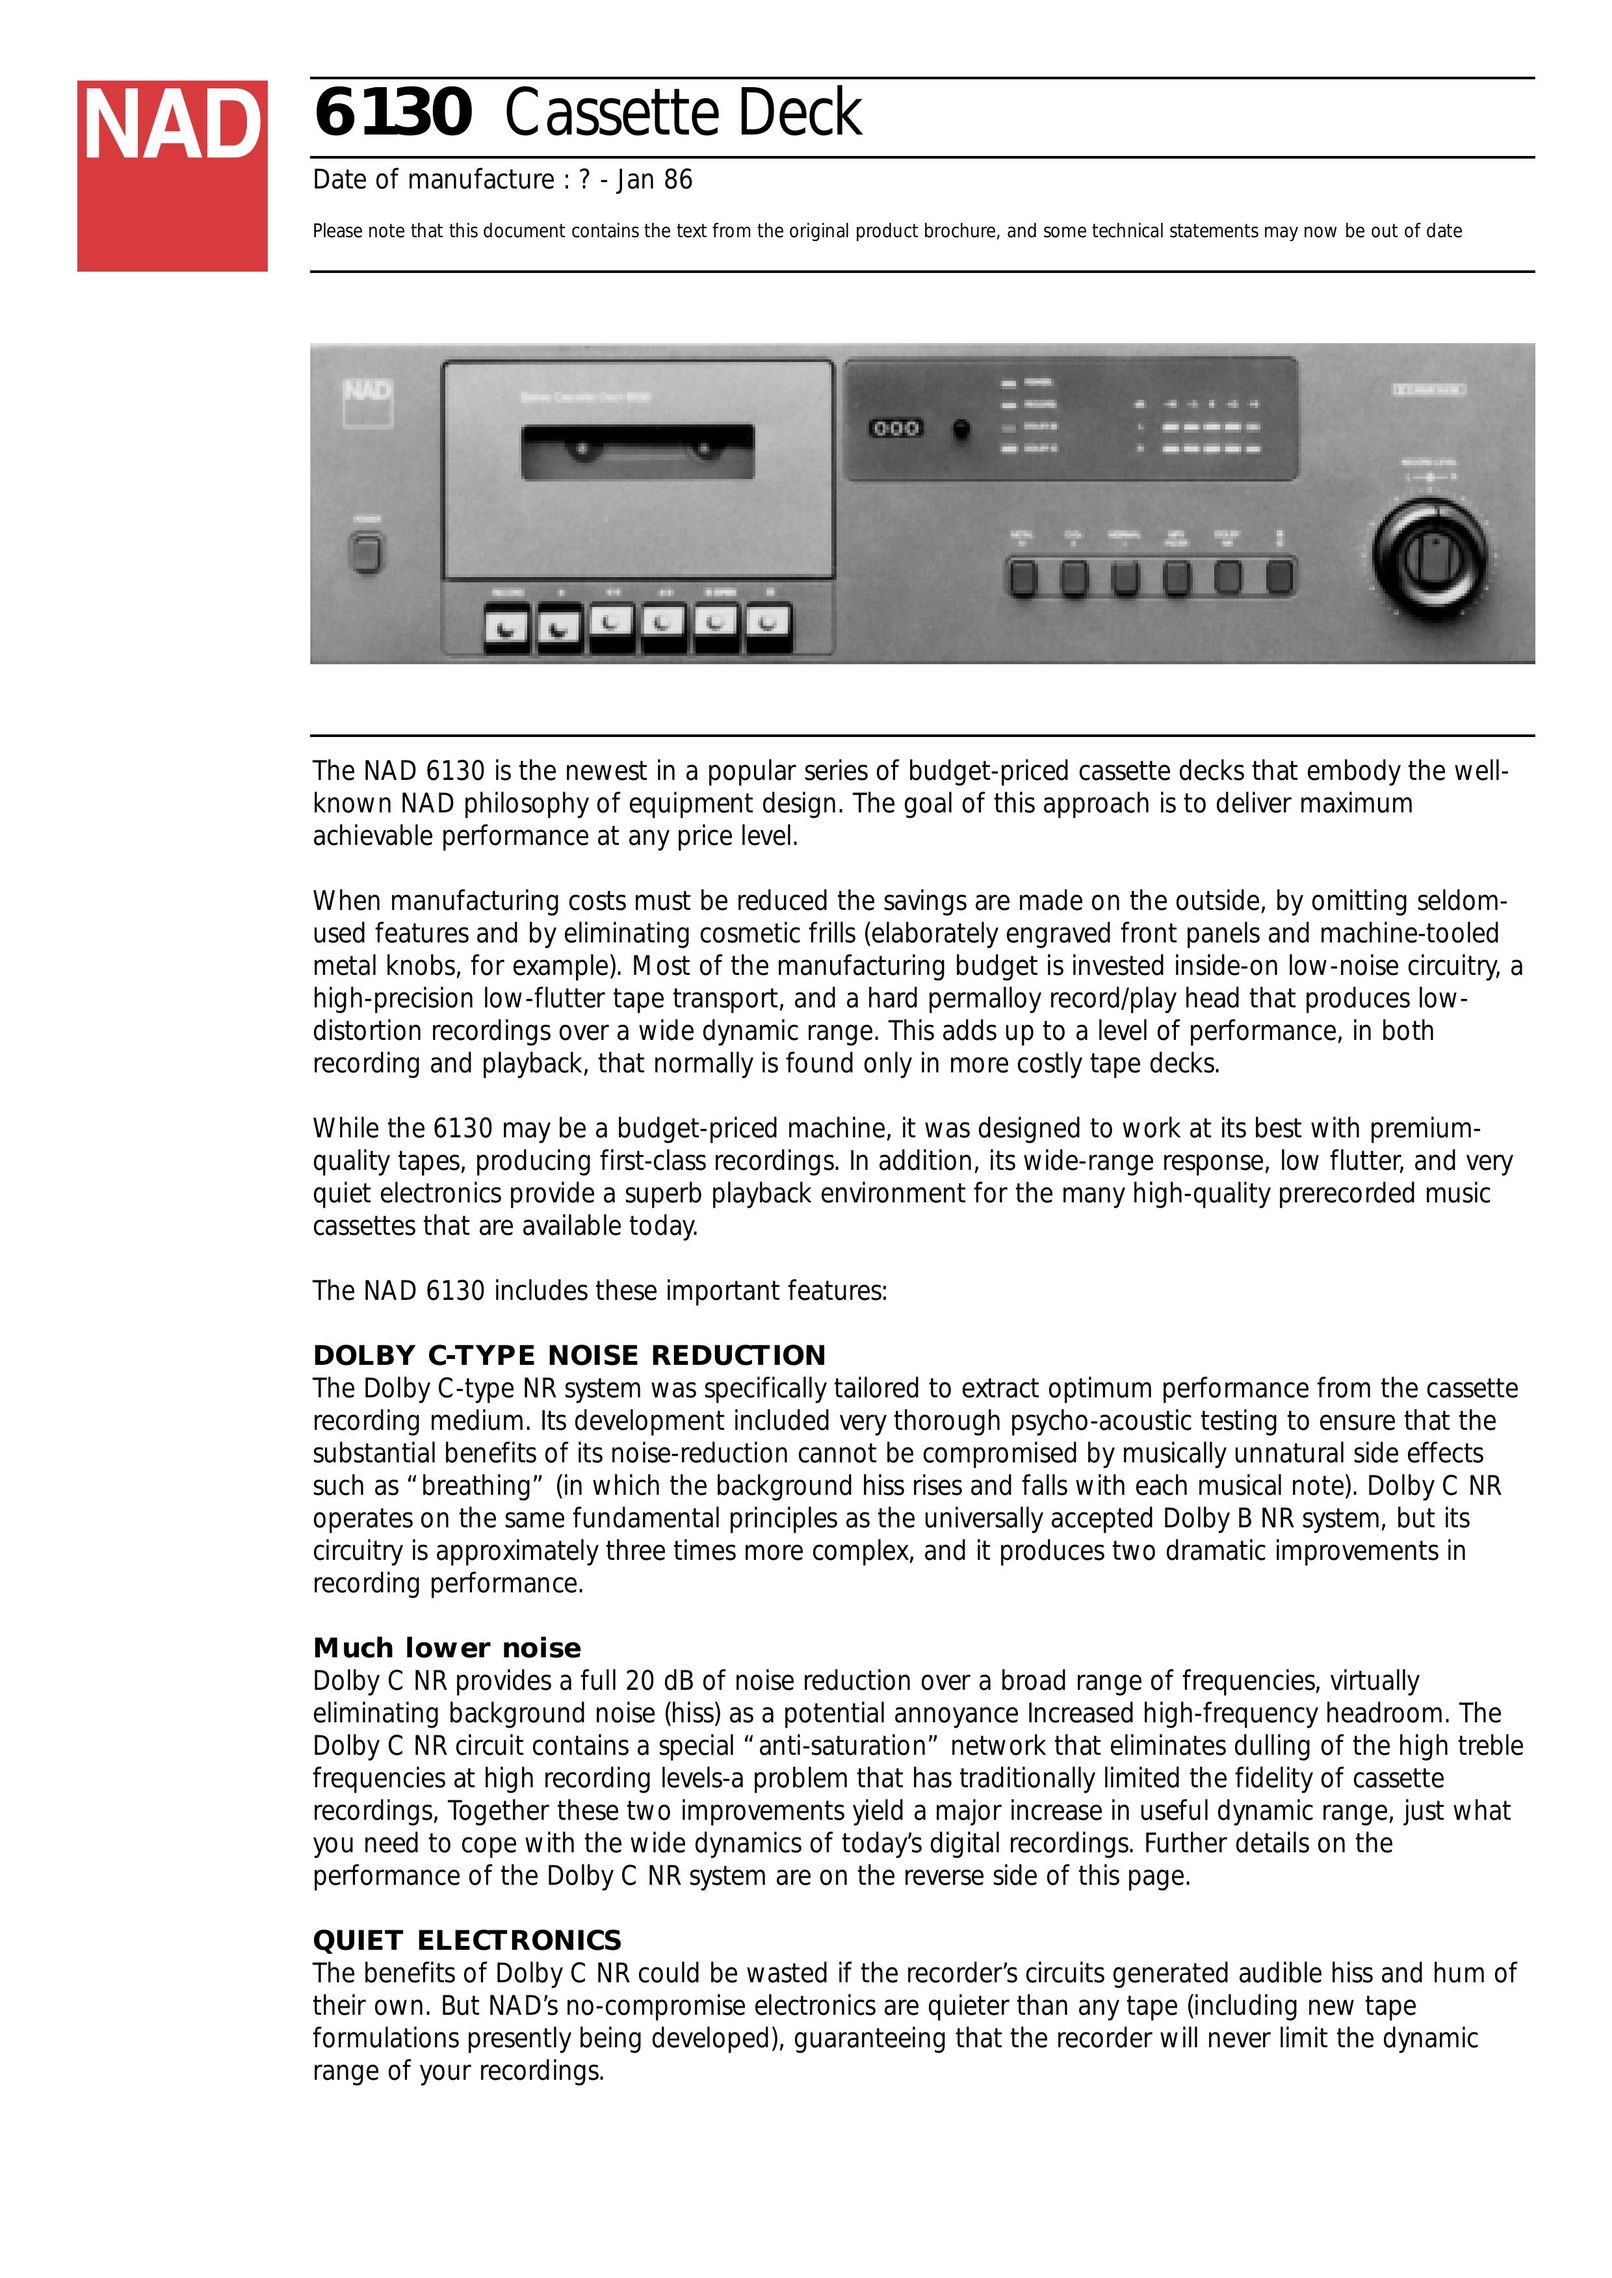 NAD 6130 Cassette Player User Manual